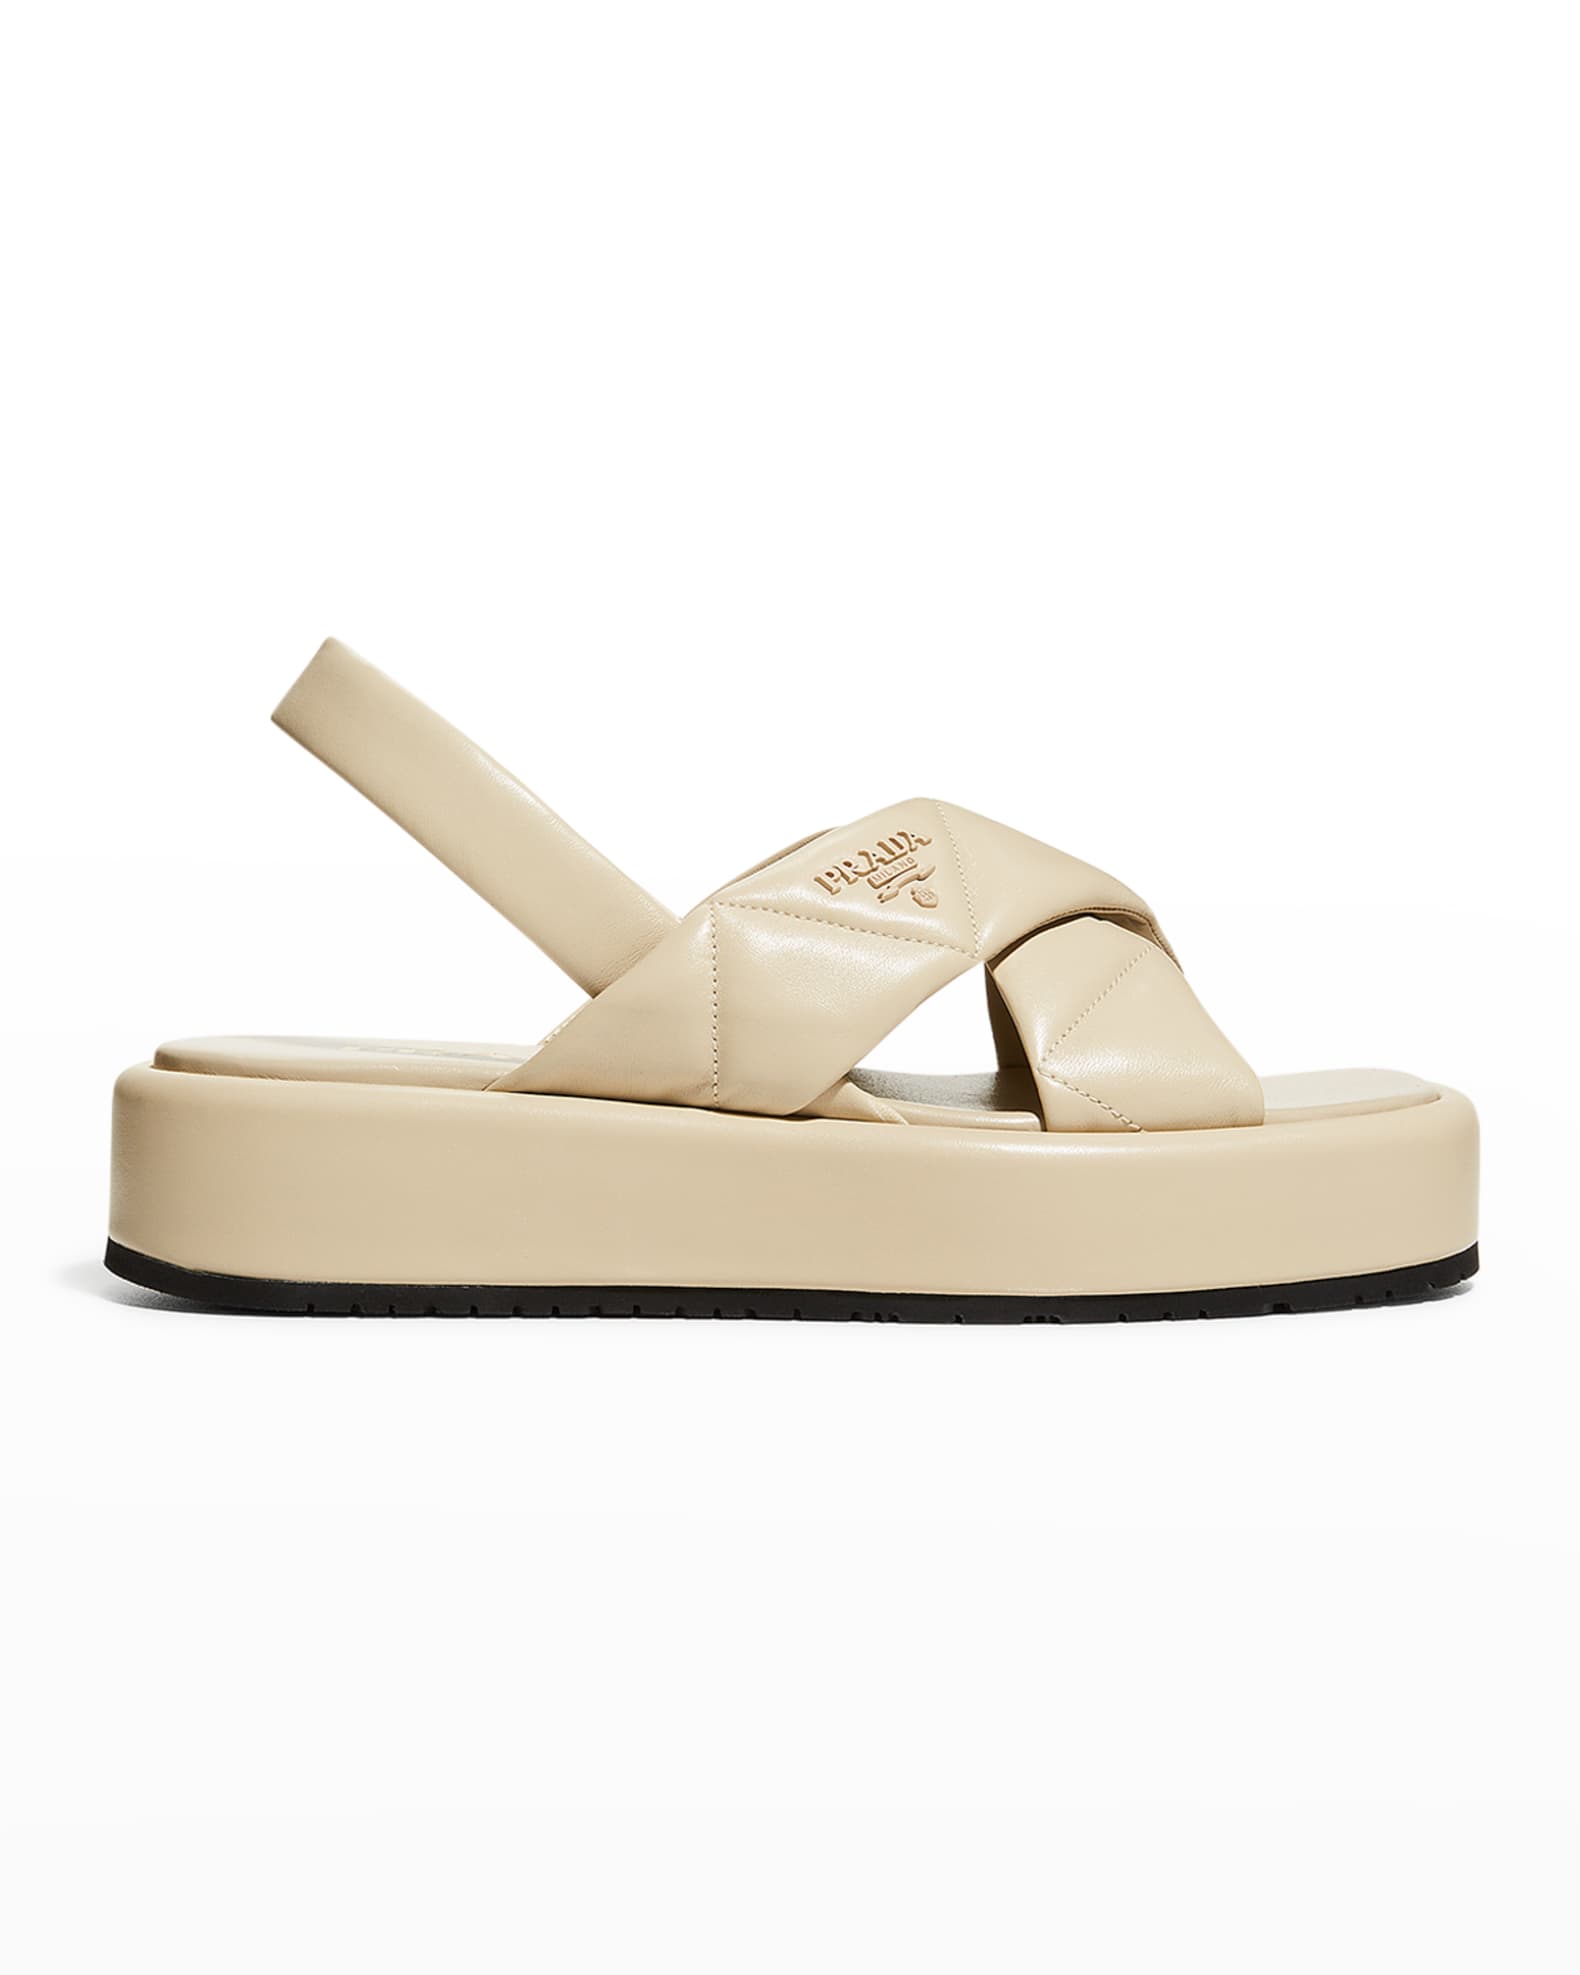 Prada Quilted Lambskin Flatform Sandals | Neiman Marcus